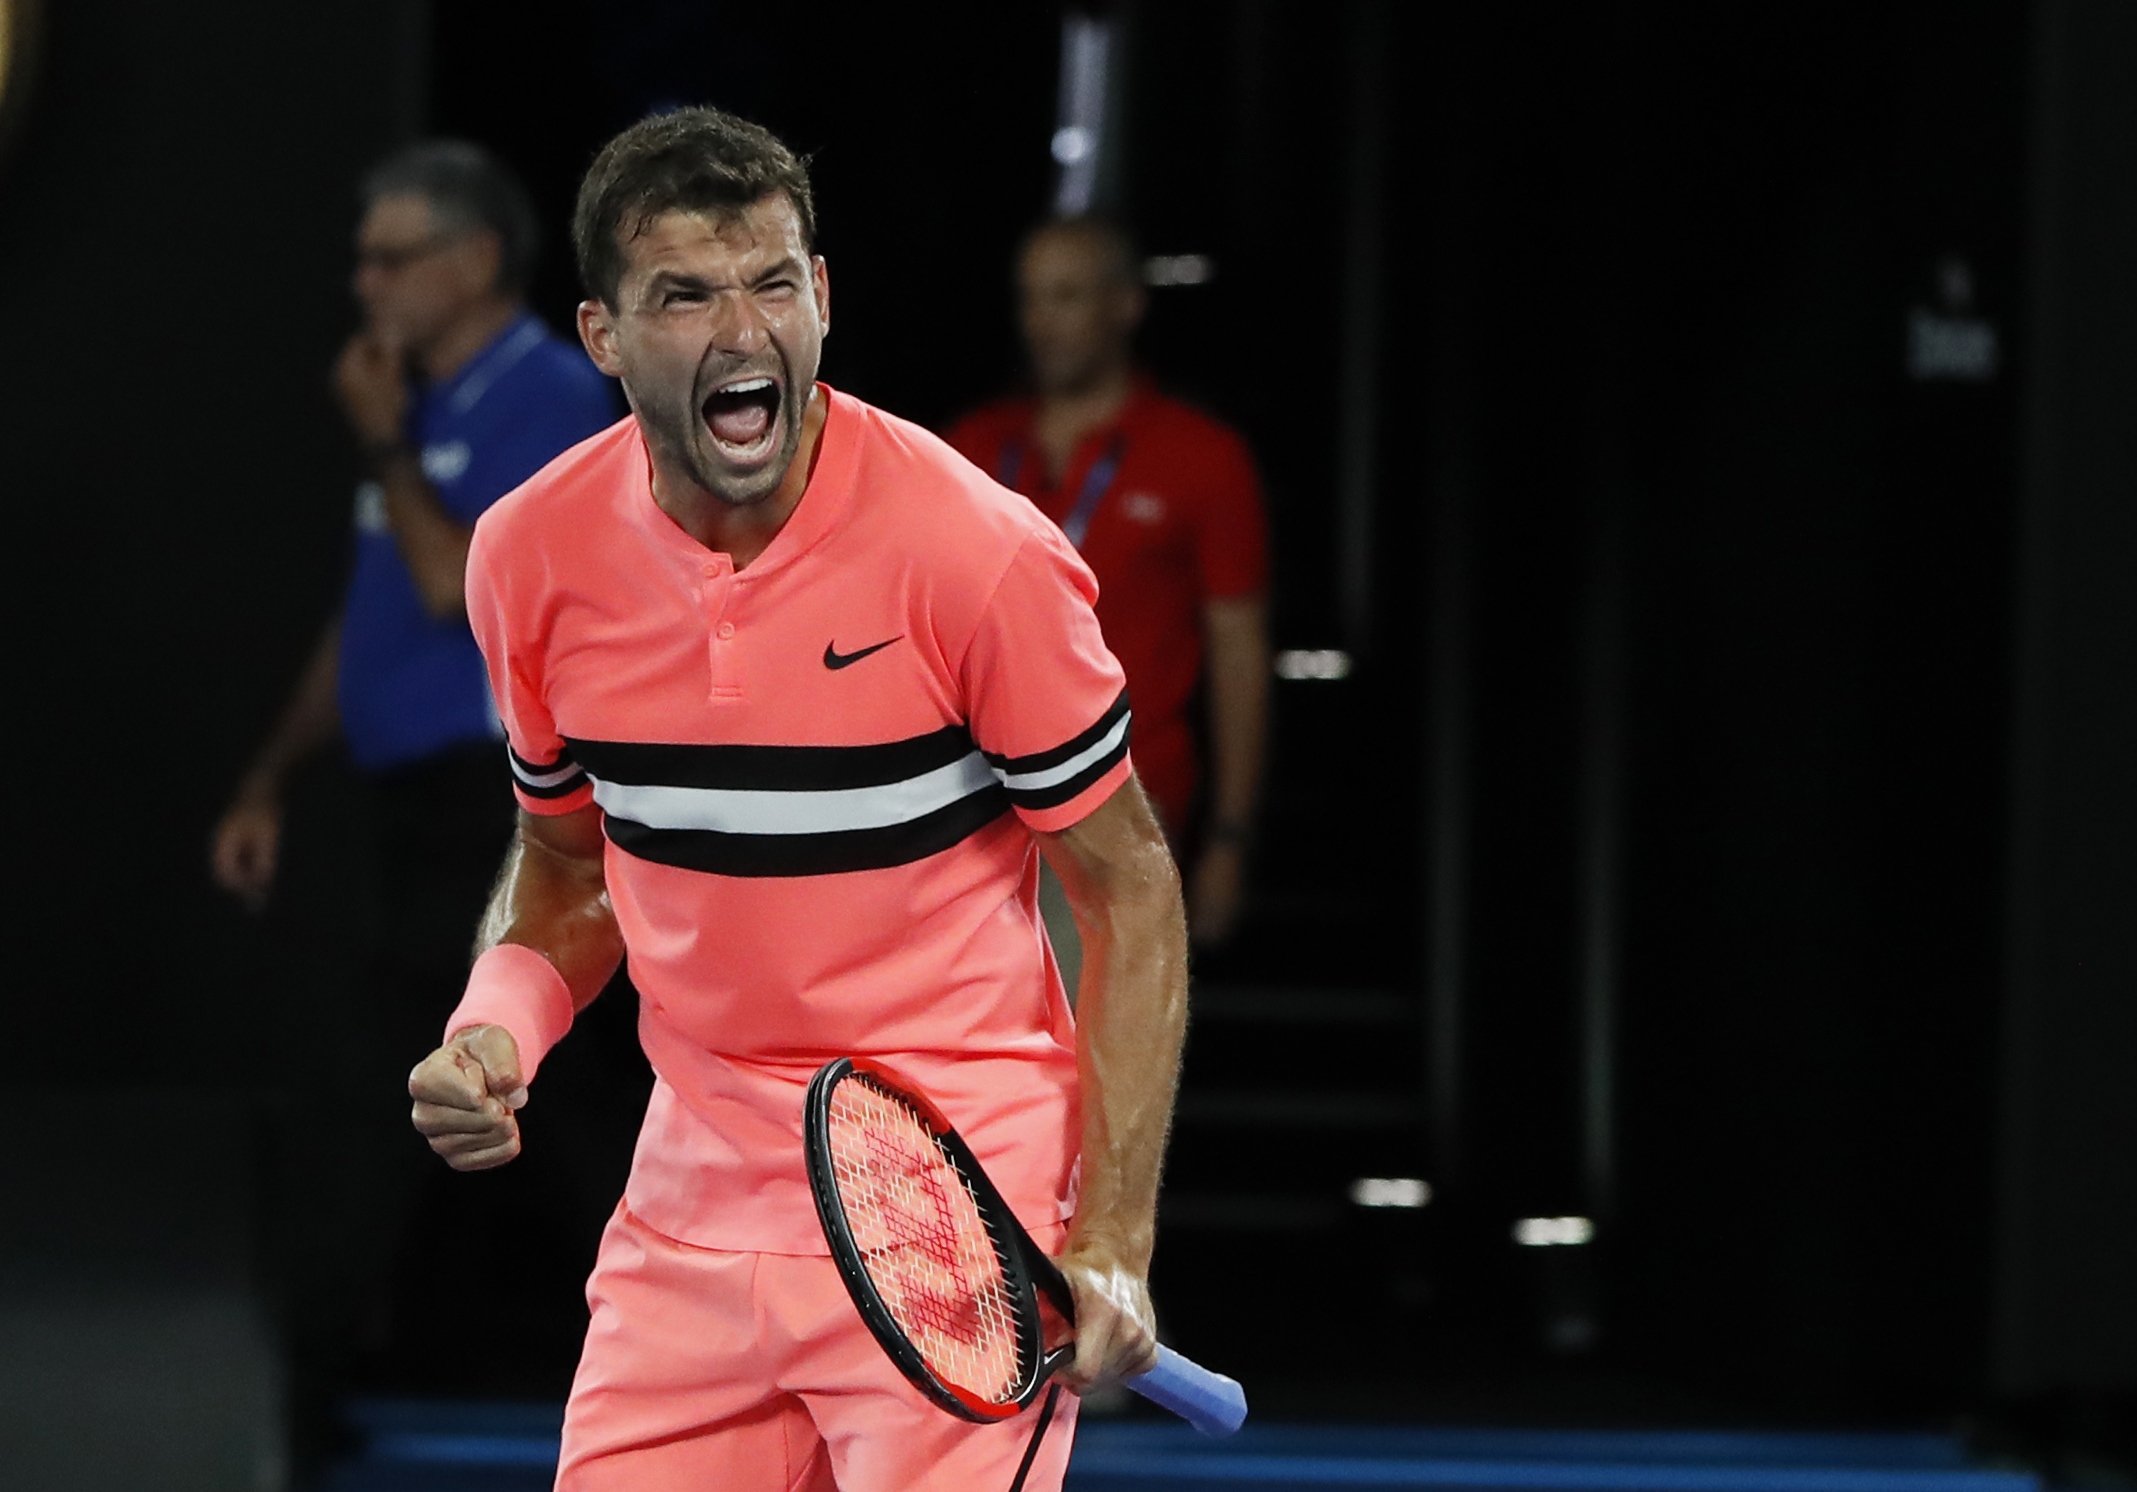 Tennis: Dimitrov survives scare against McDonald to reach third round